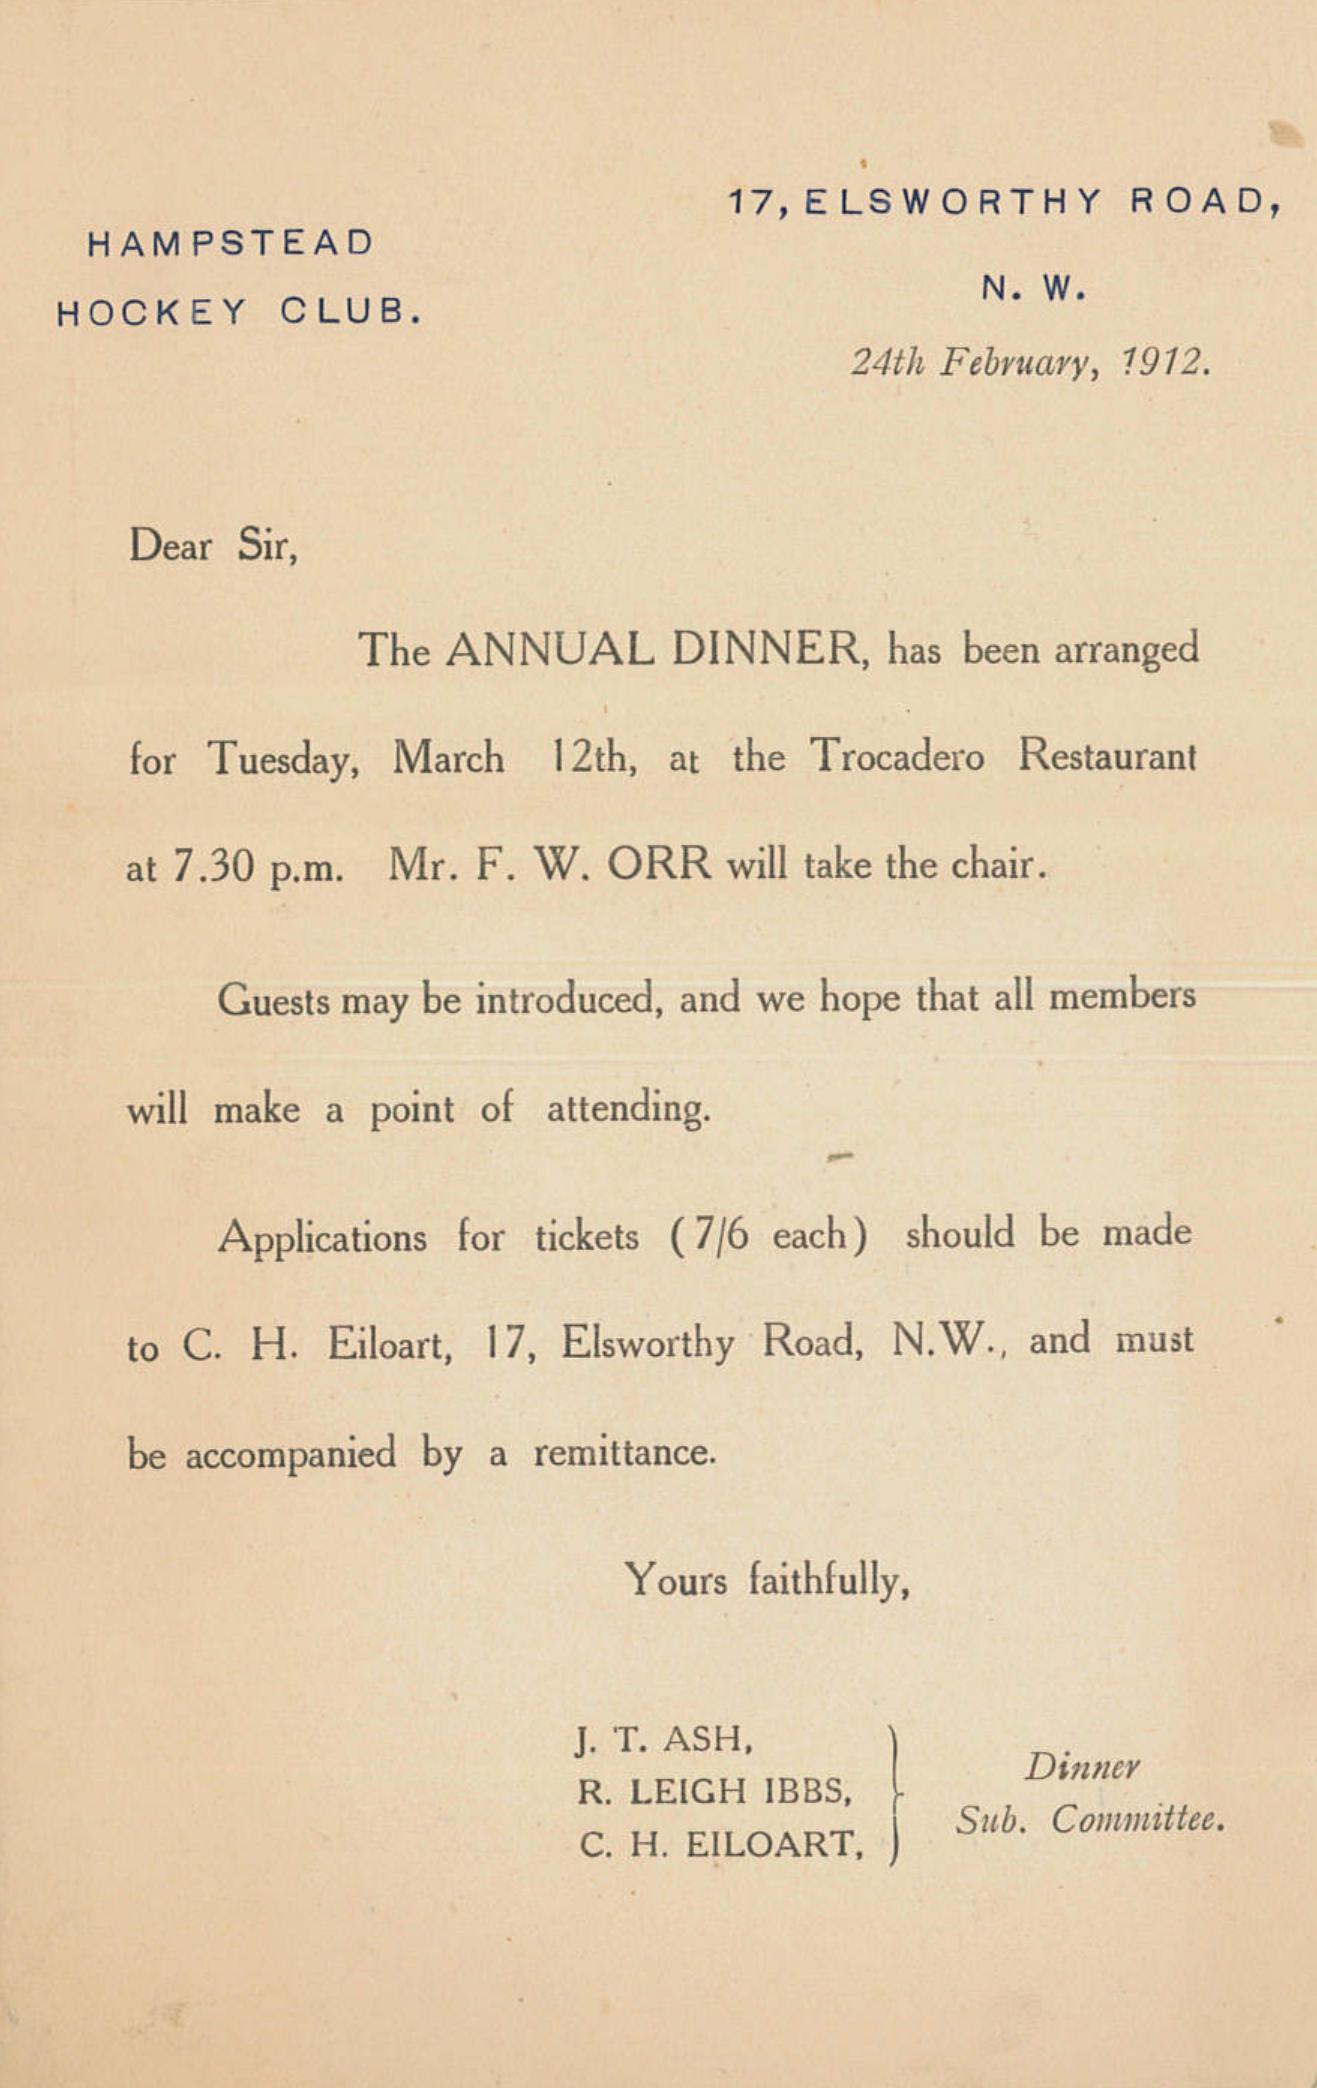 1895 Letter Richmond Athletic Assoc